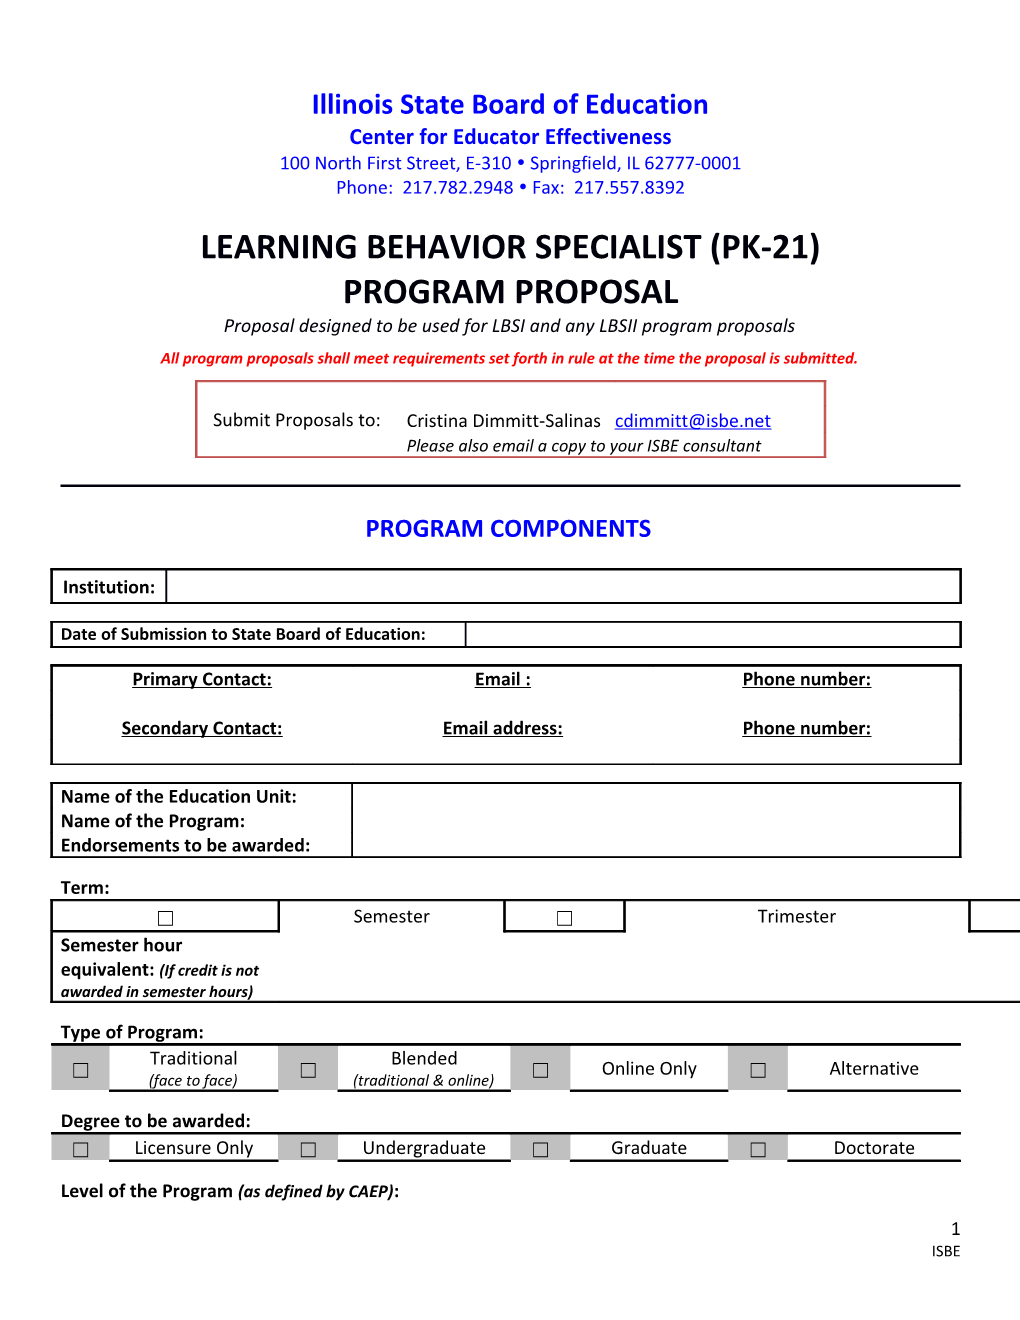 Learning Behavior Specialist (PK-21)